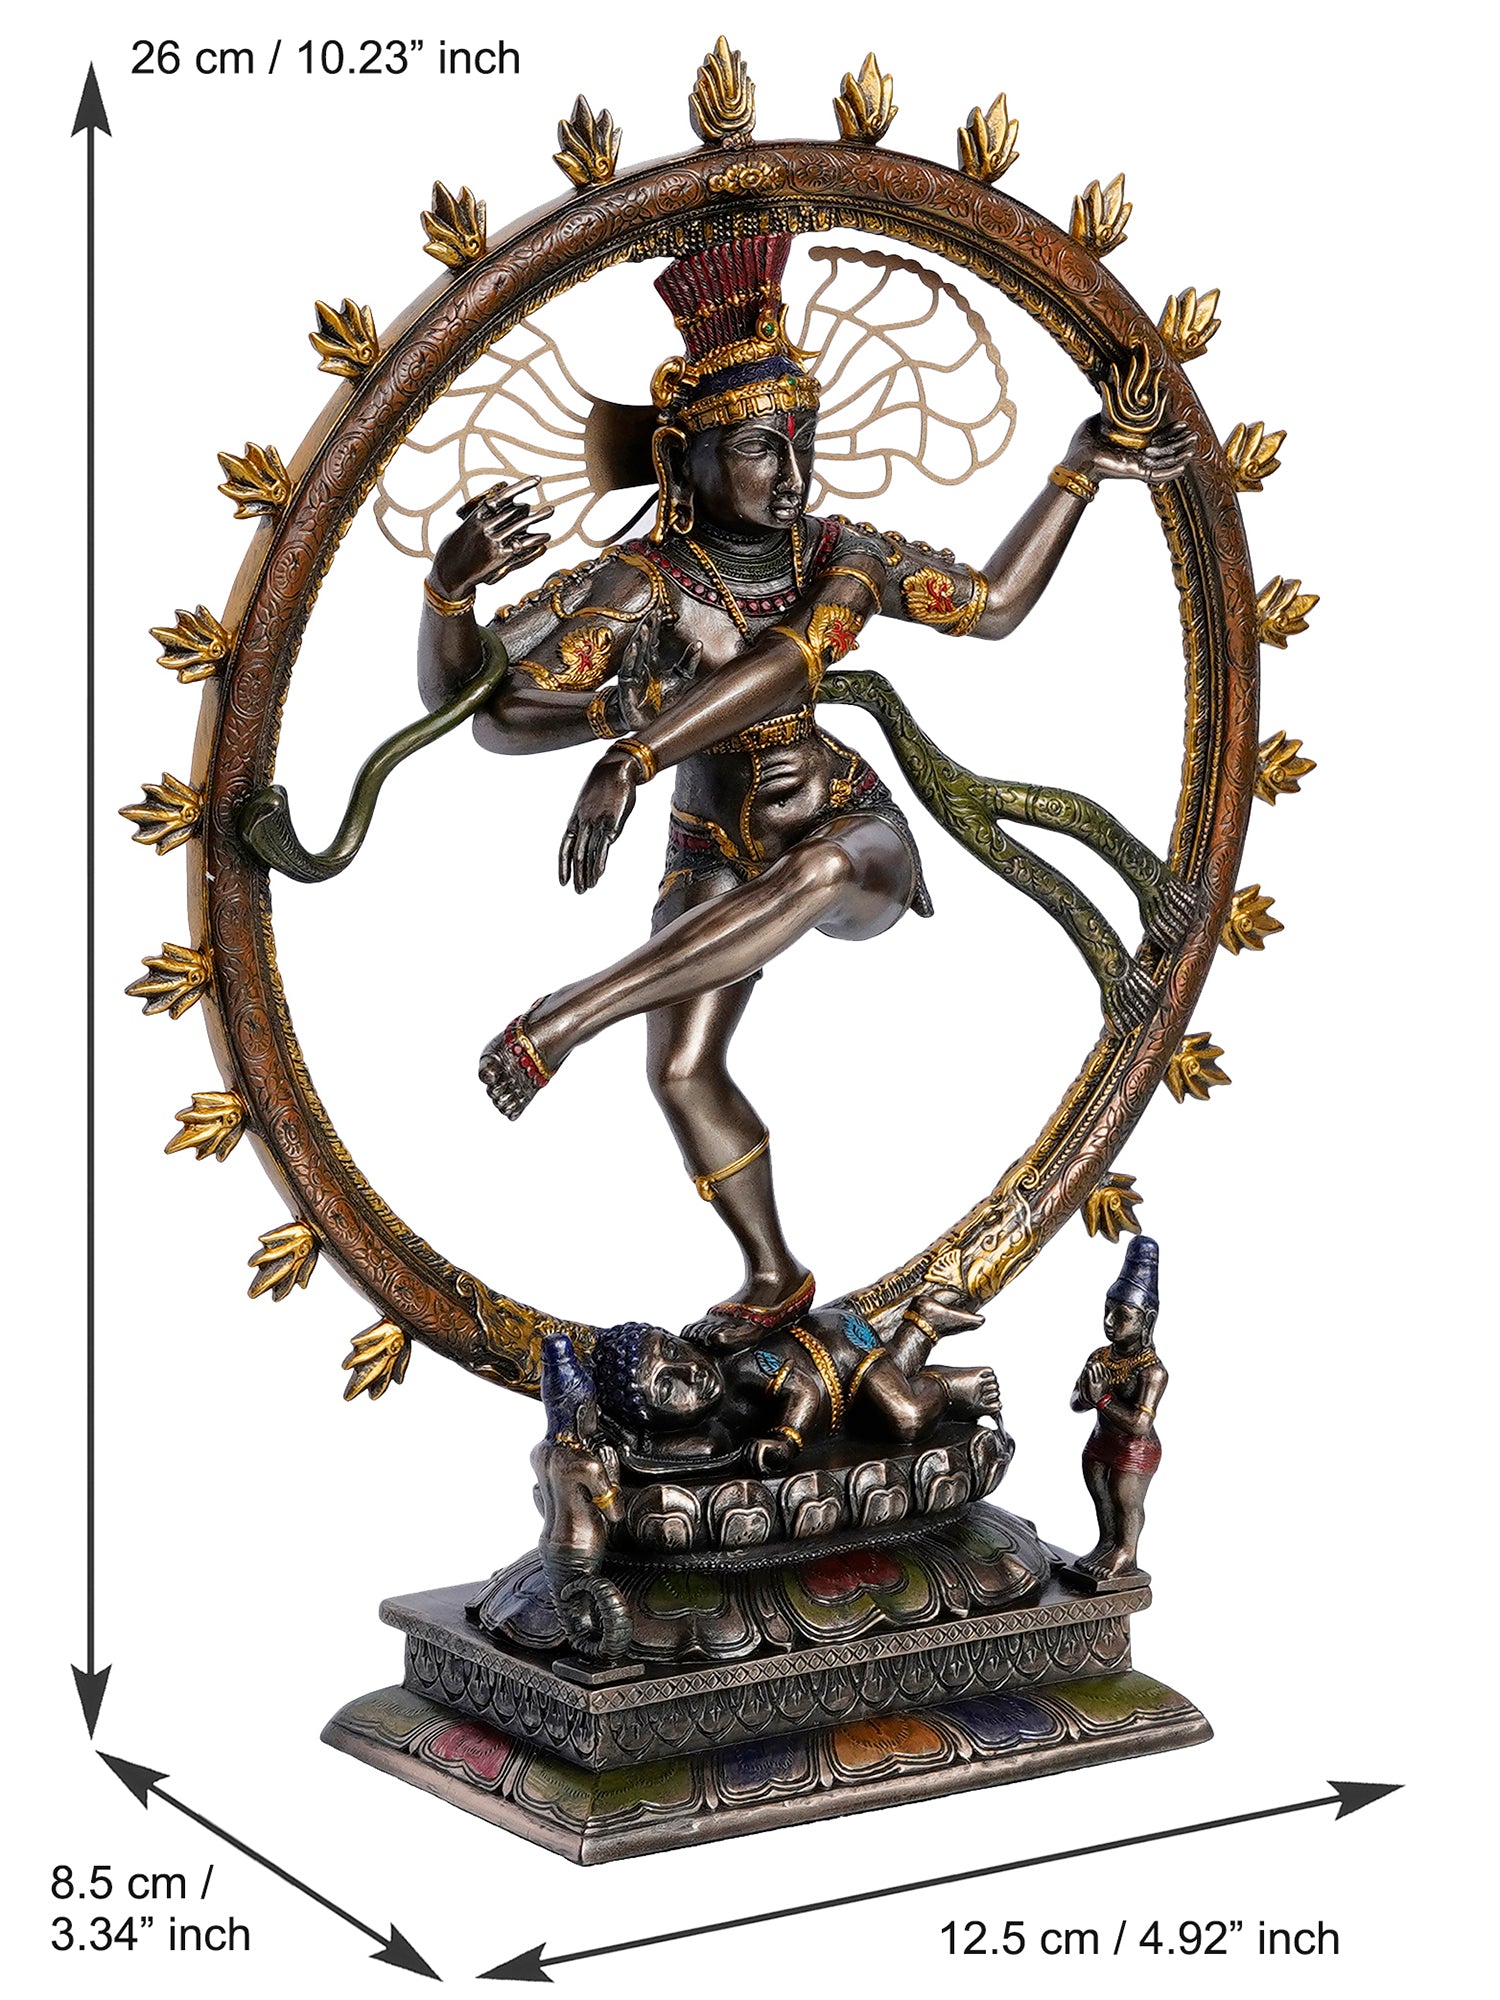 Polyresin and Bronze Decorative dancing nataraja statue 3